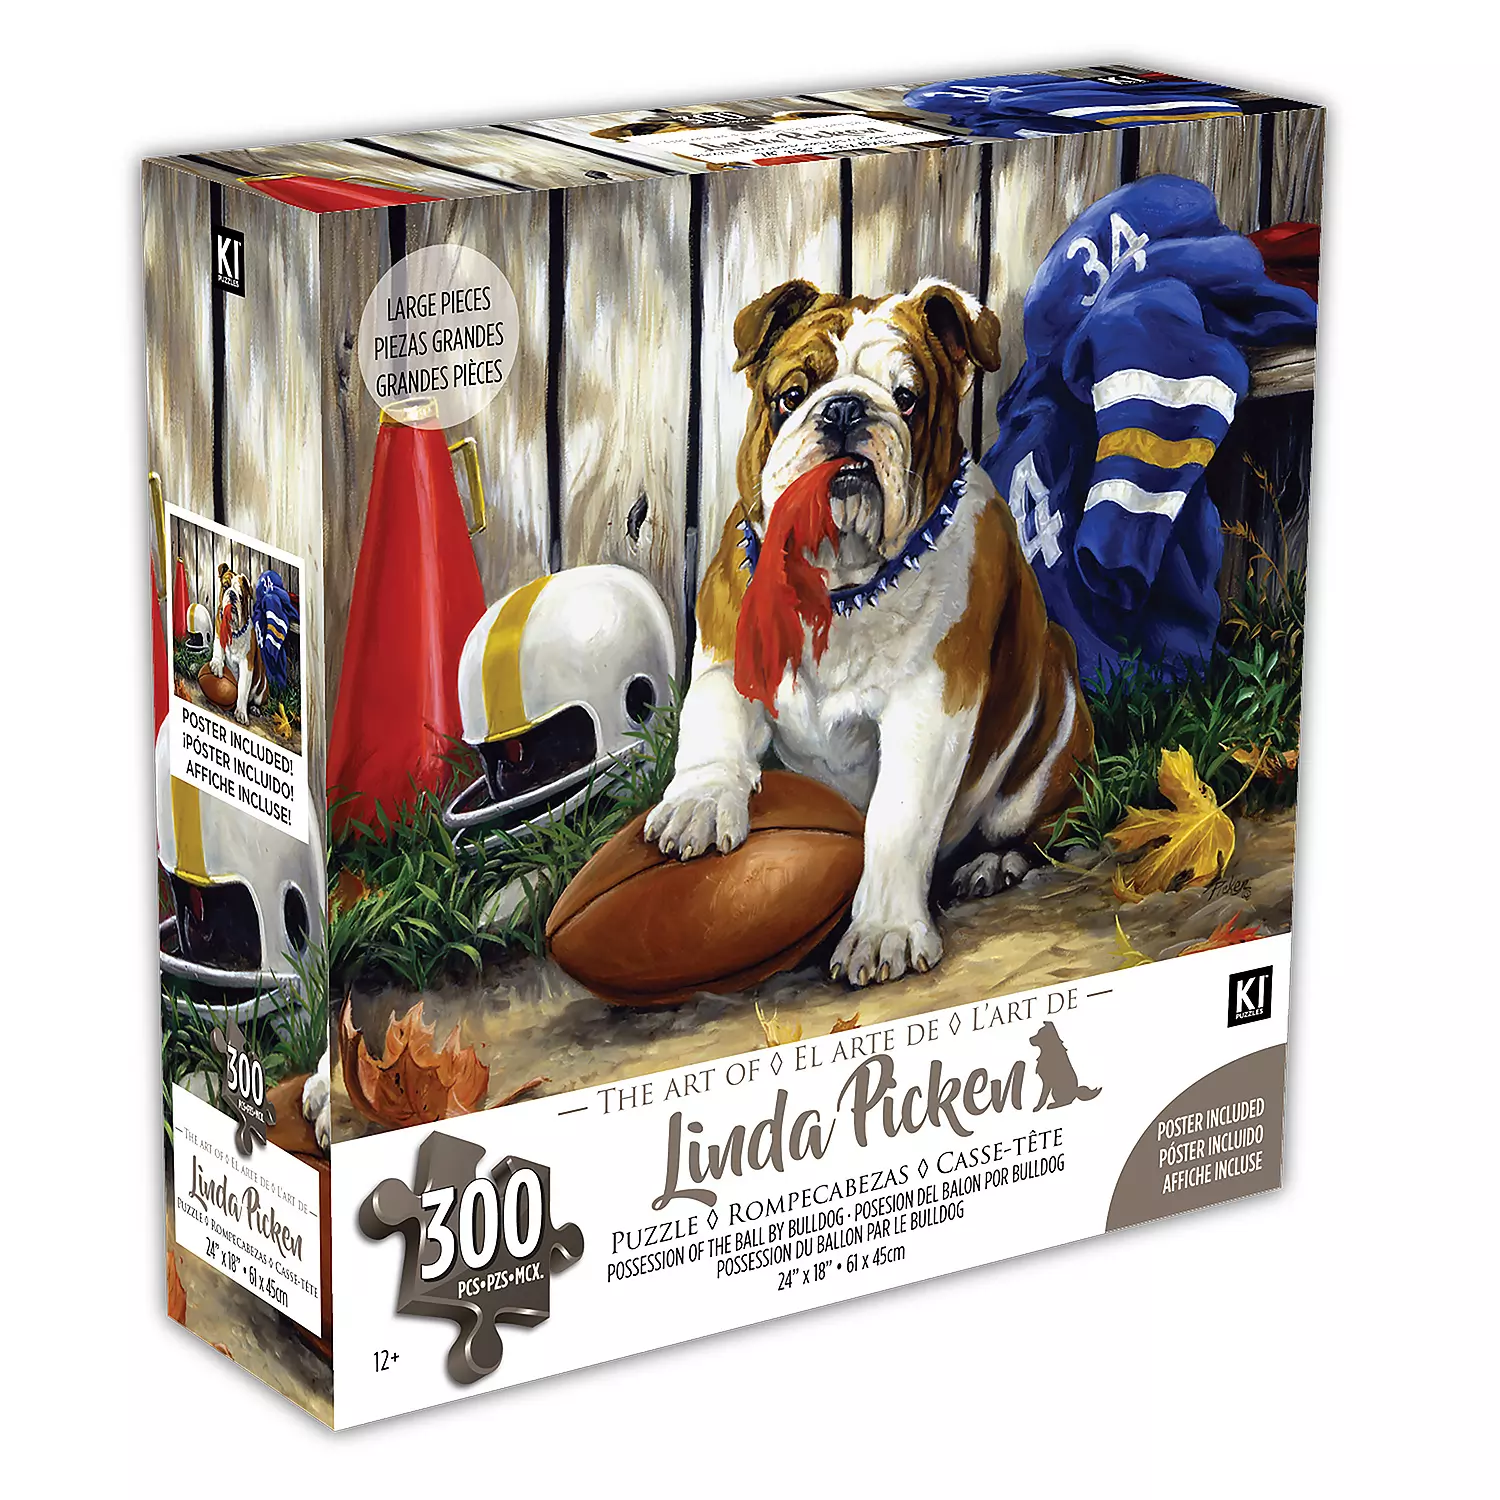 KI - Puzzle, Linda Picken, Possession of the ball by bulldog, 300 pcs